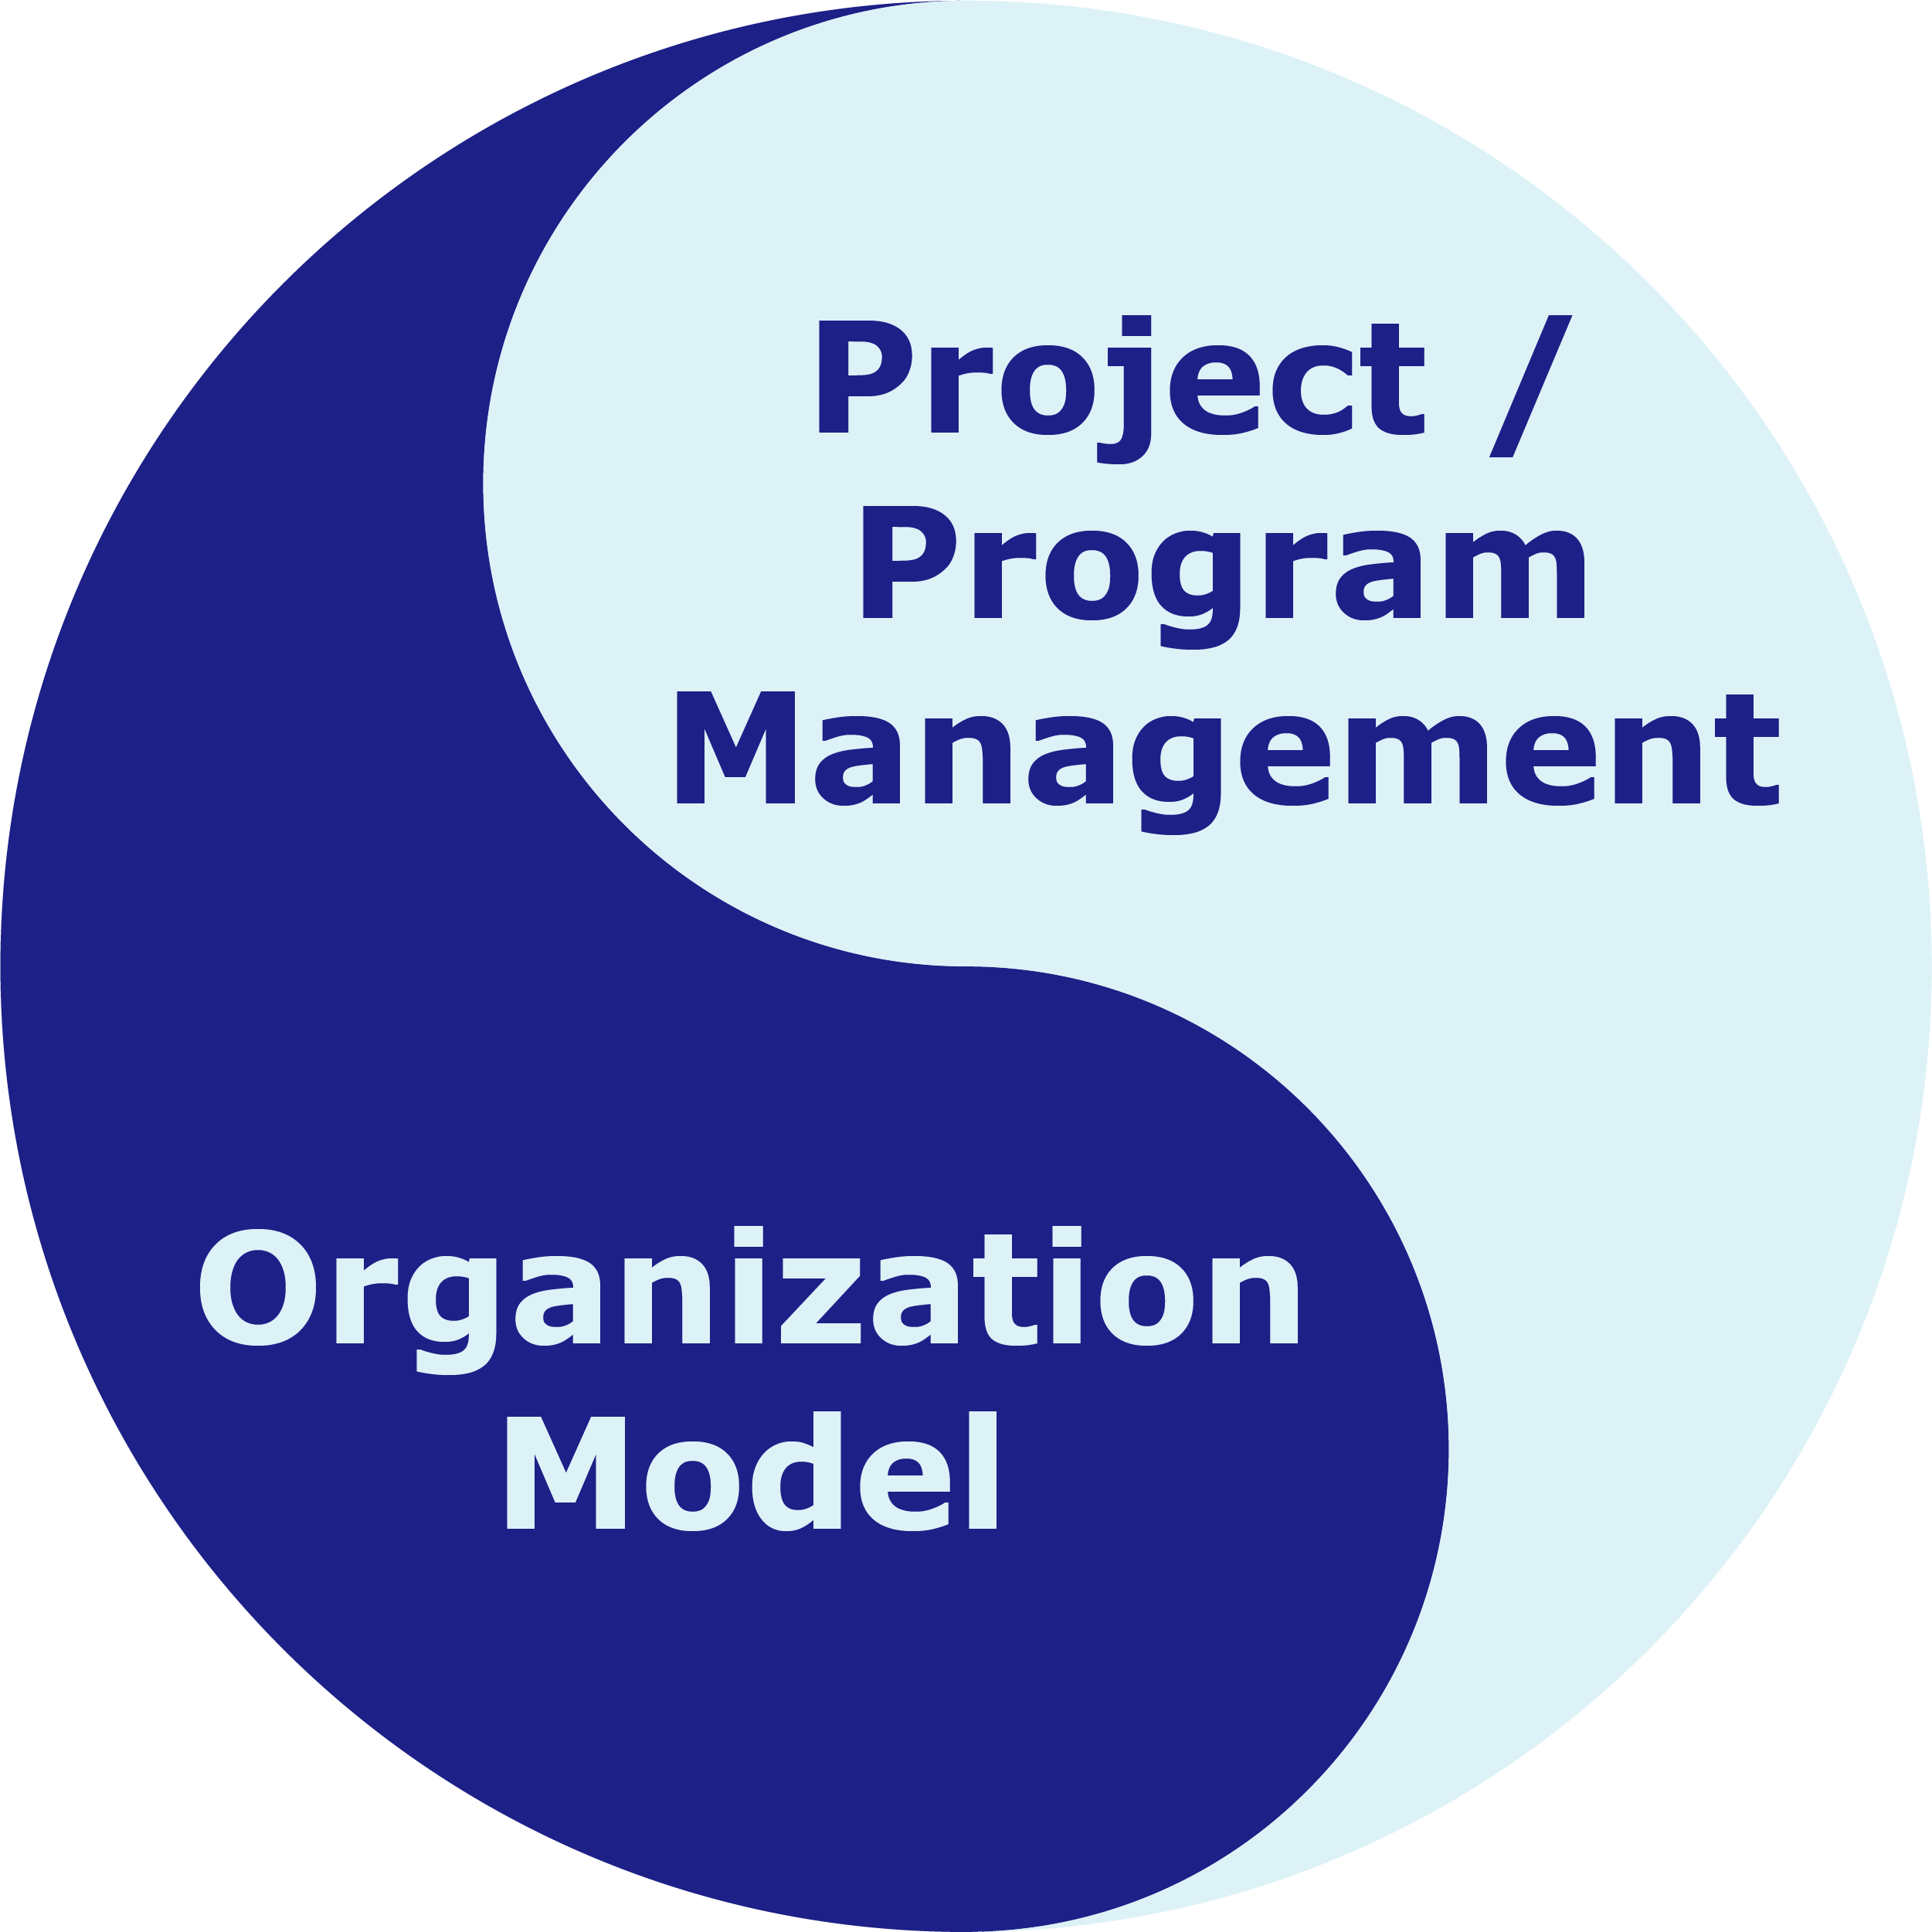 Project/Program Management & Organization Model